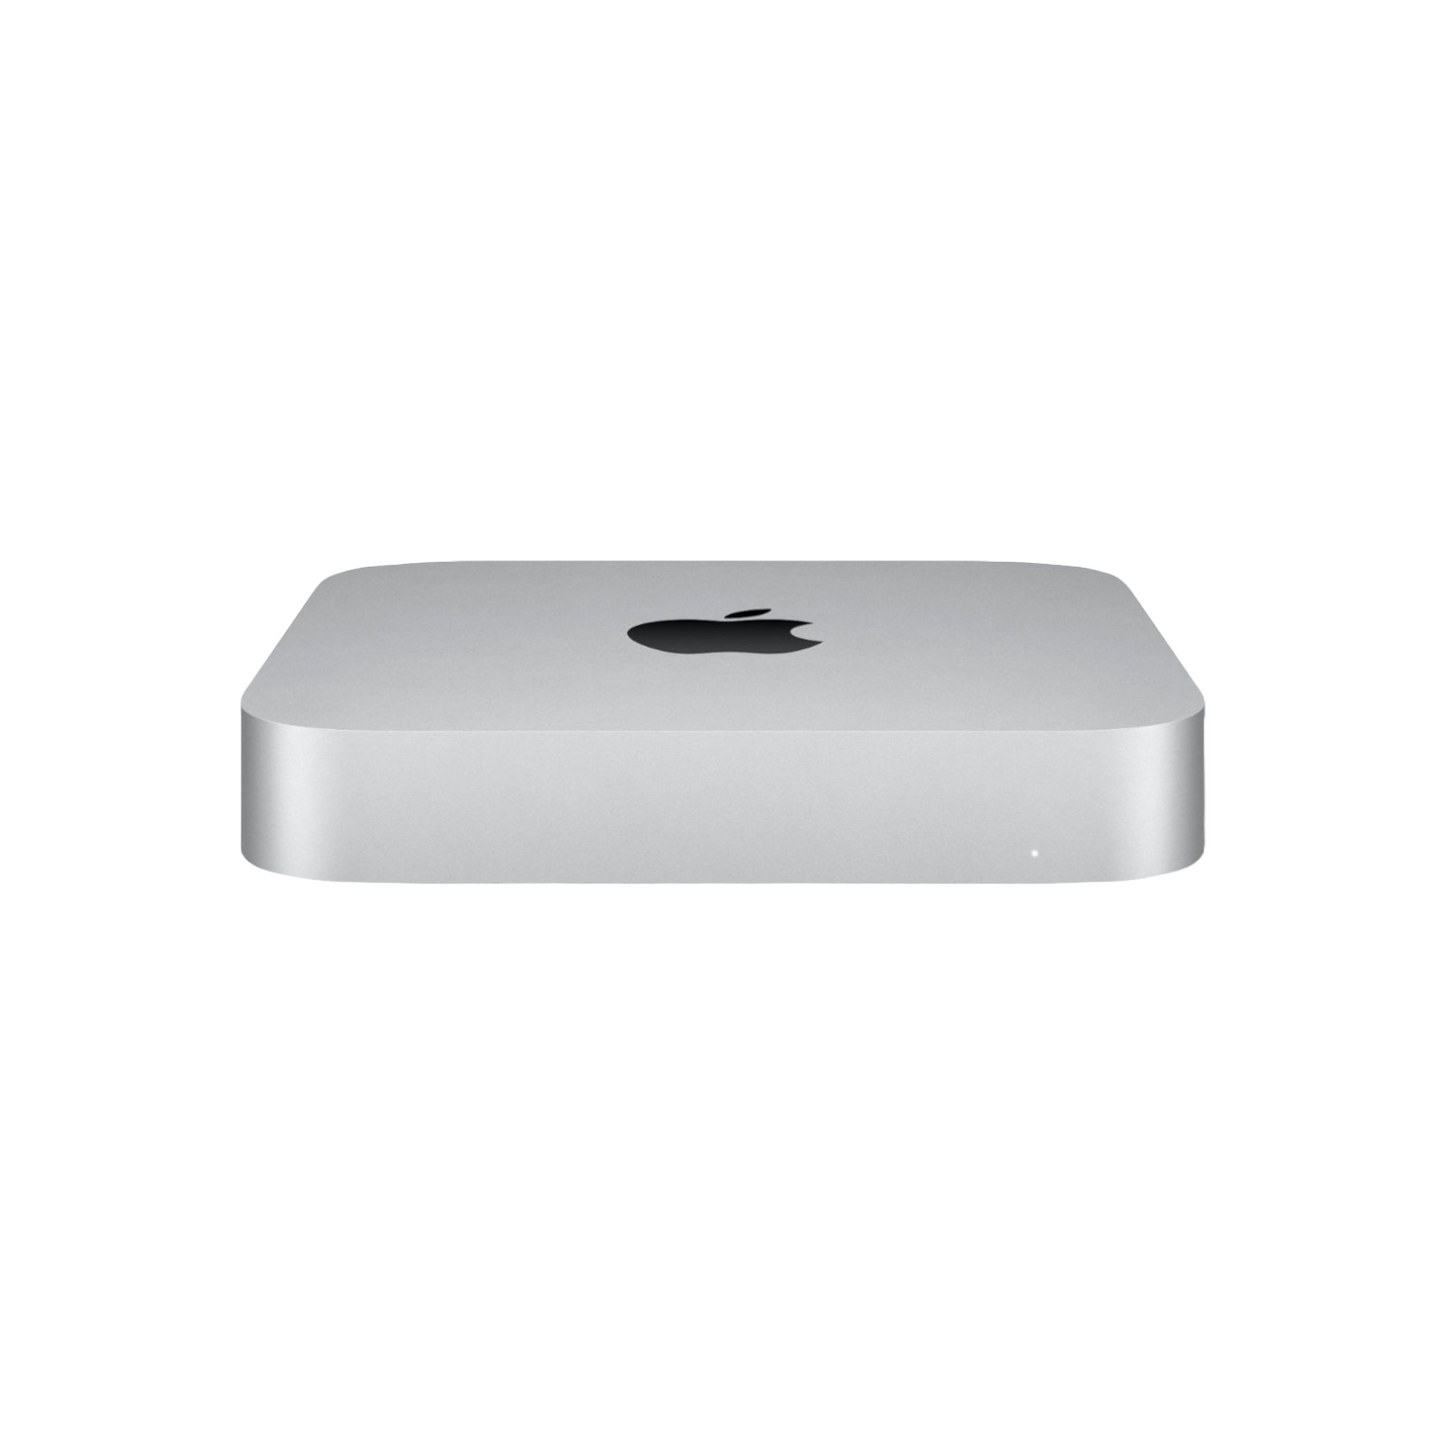 Mac mini Desktop - Apple M1 chip - 8GB Memory - 256GB SSD  - Silver